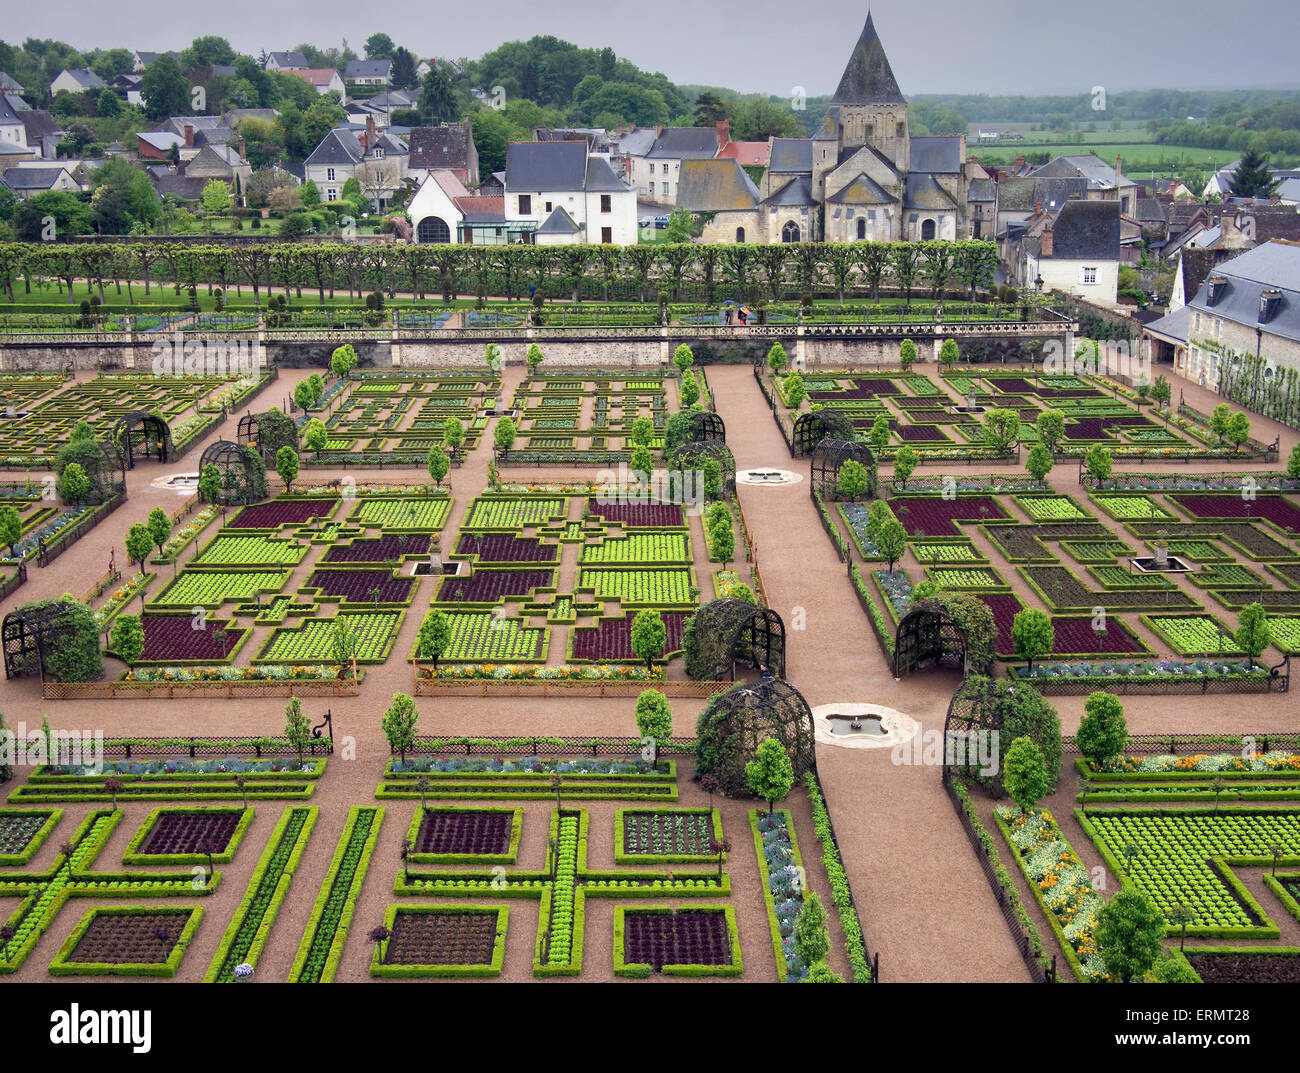 The ornamental garden at Le Chateau Villandry in the Loire region of France Stock Photo